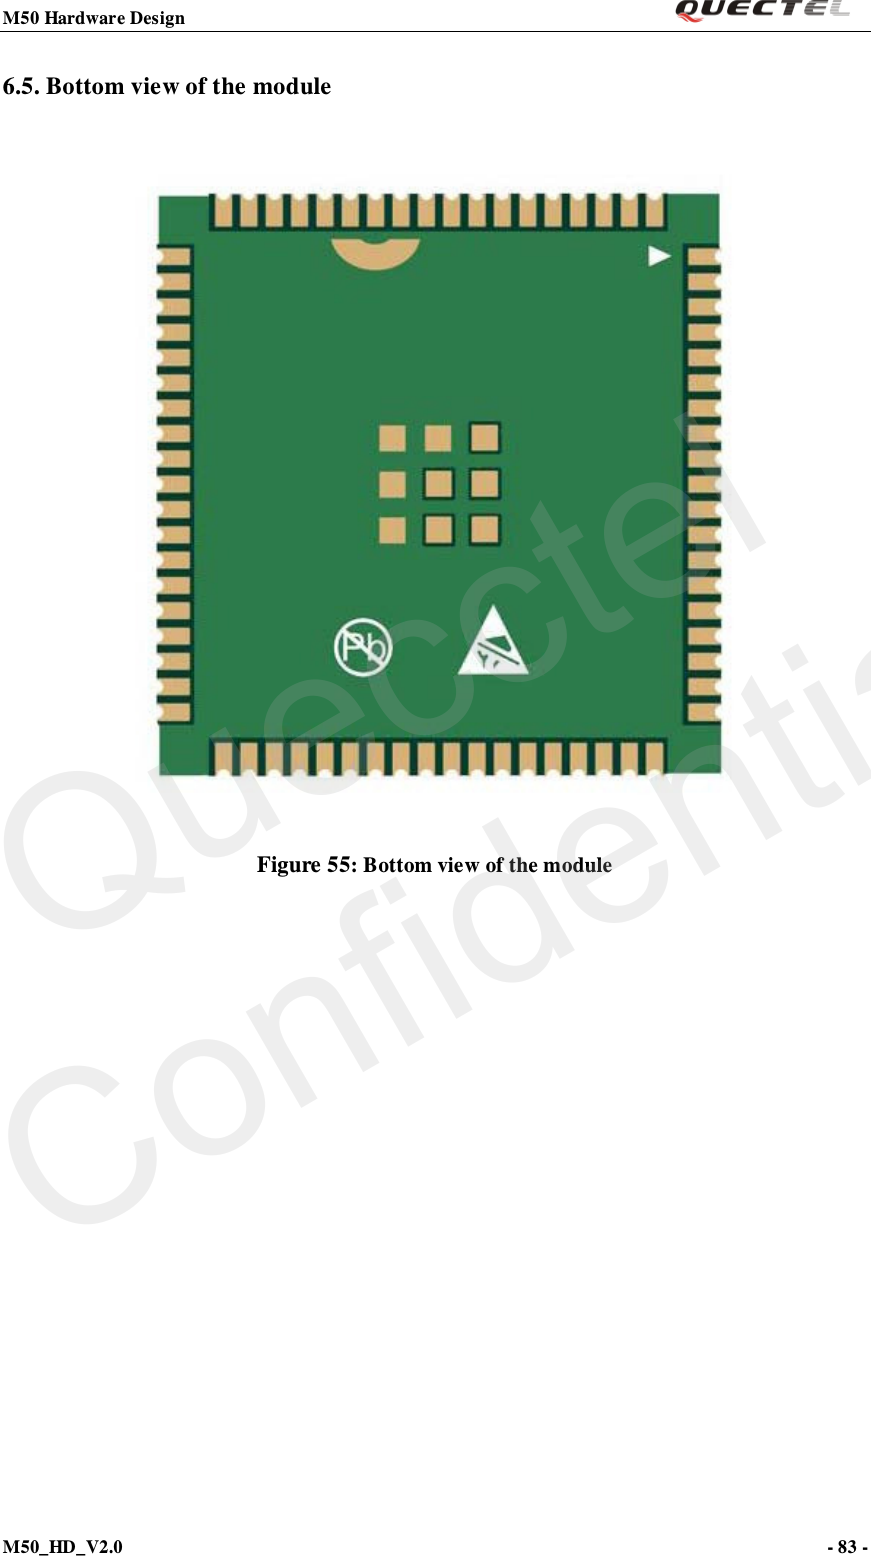 M50 Hardware Design                                                                M50_HD_V2.0                                                                      - 83 -   6.5. Bottom view of the module  Figure 55: Bottom view of the module   Quecctel Confidential